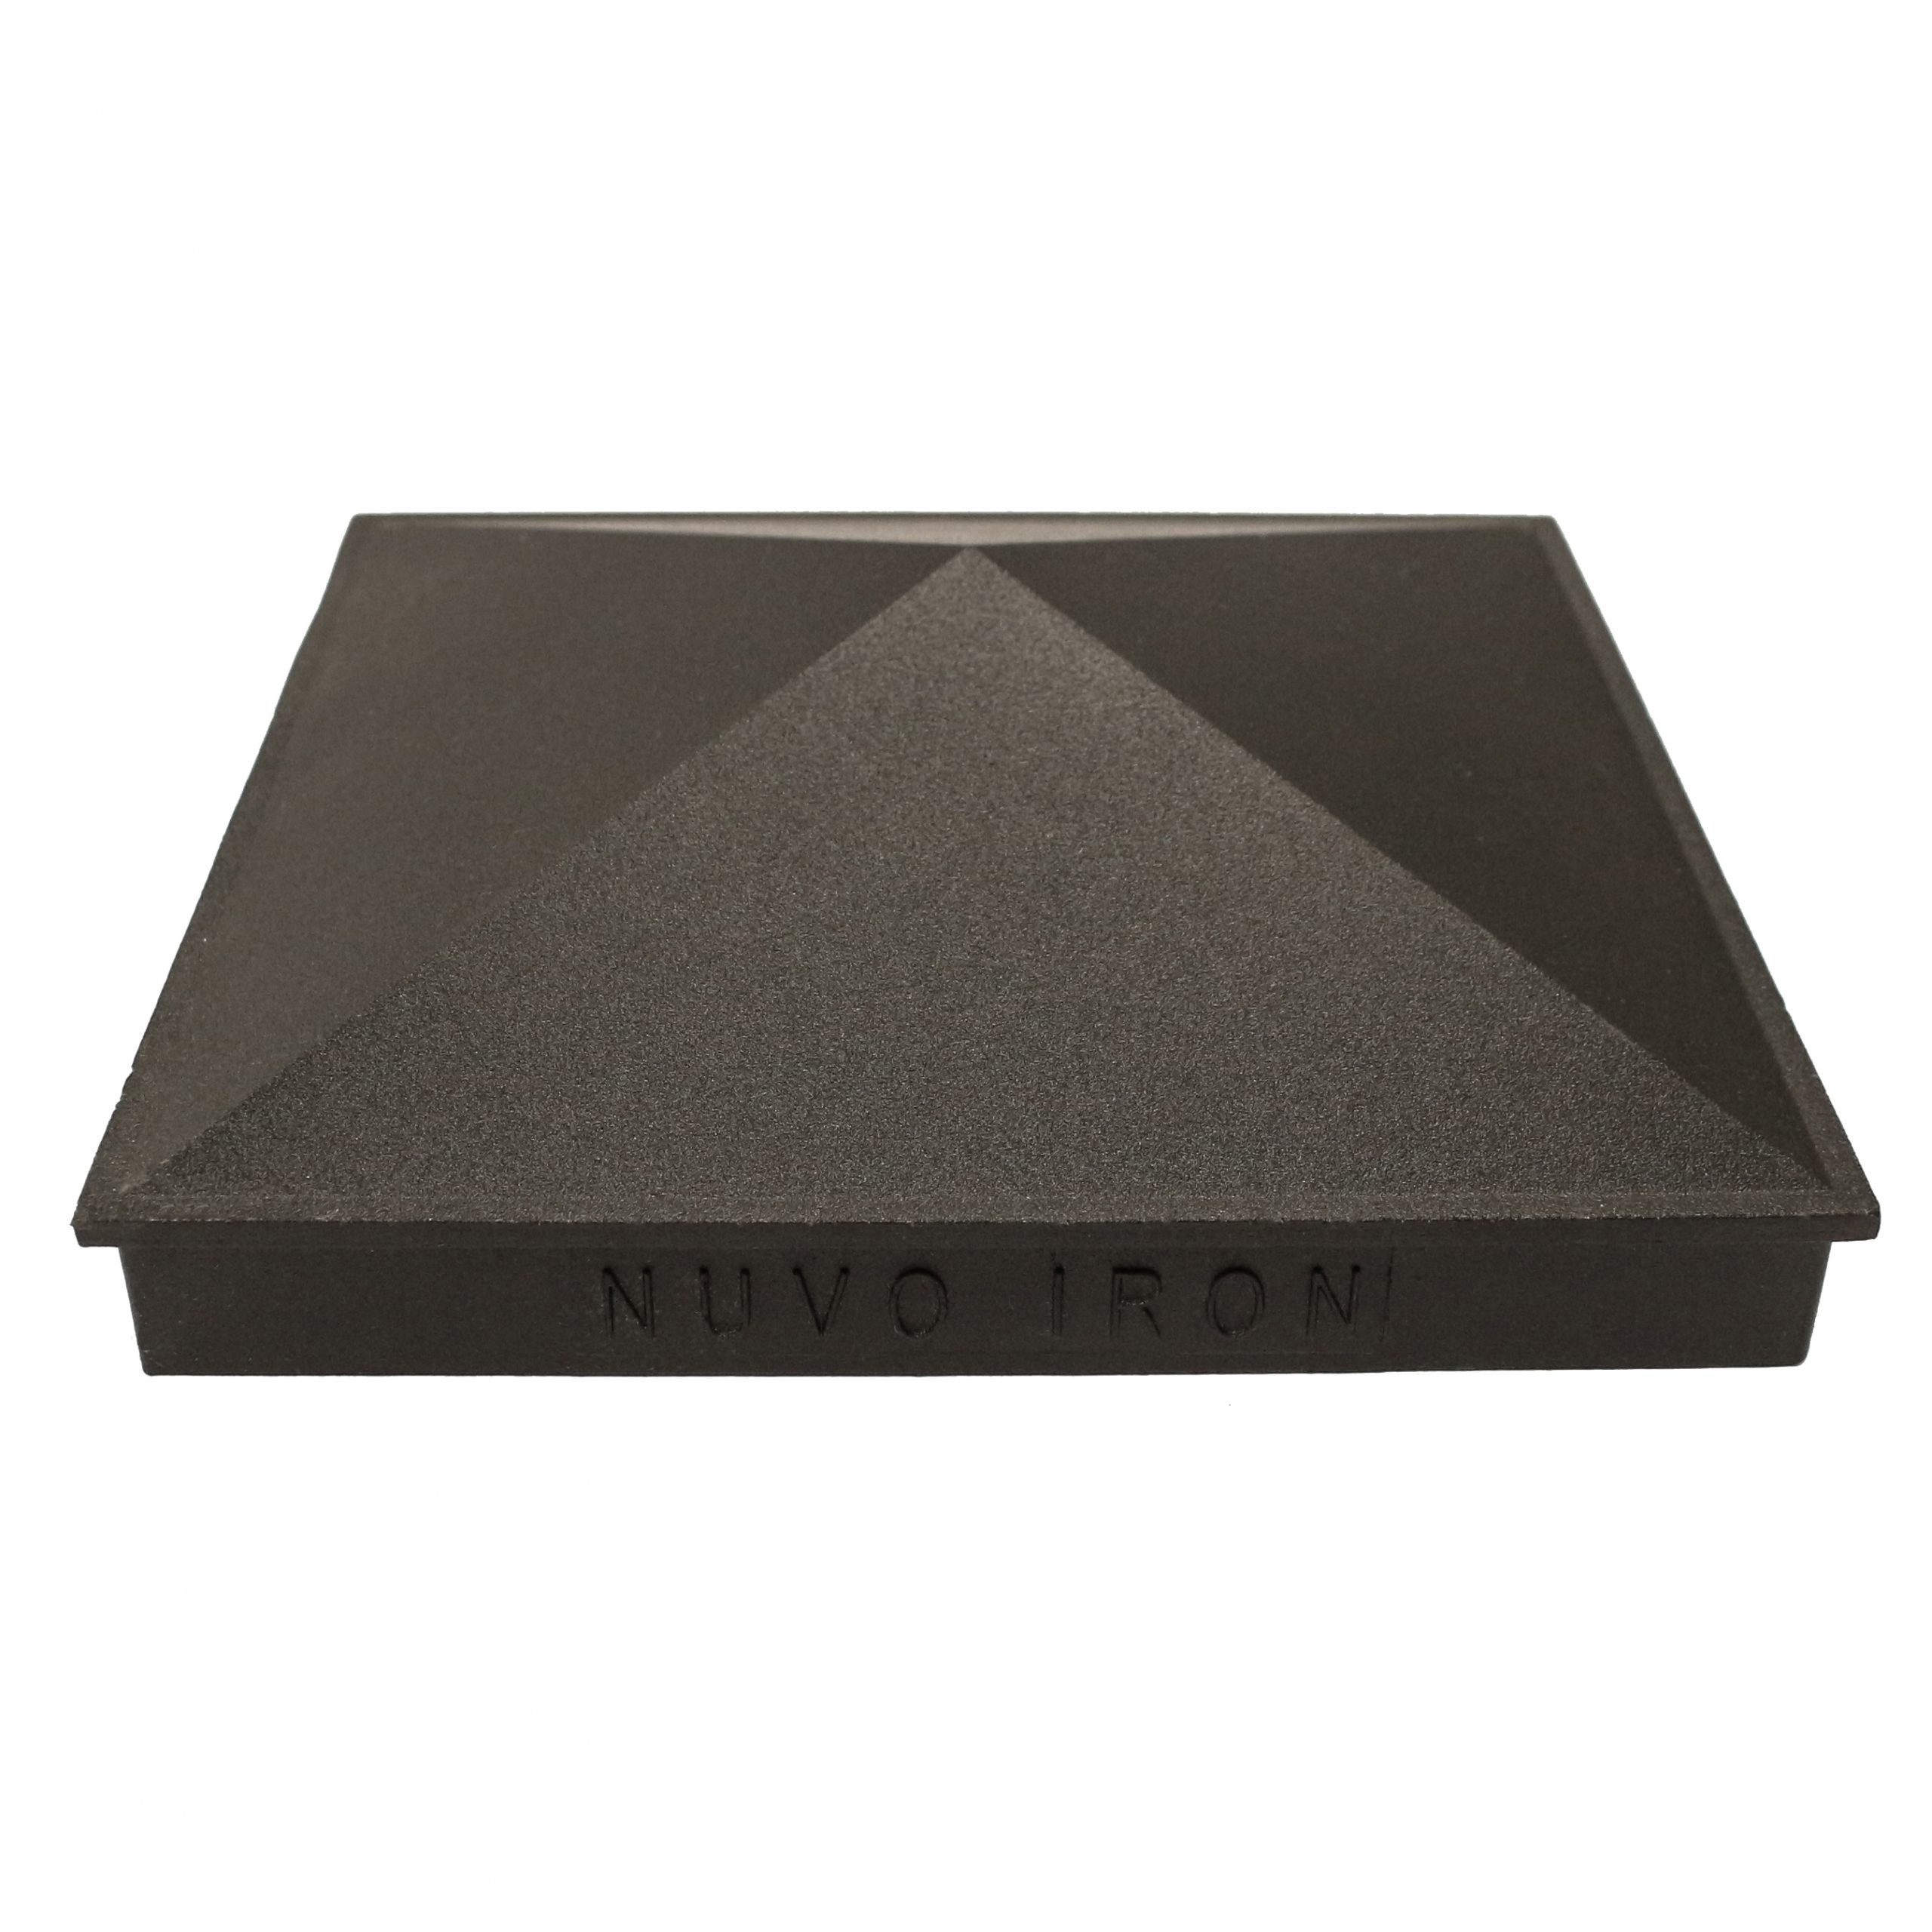 Nuvo Iron 2"x 2" Pyramid Ornamental Aluminum Post Cap for 2"x 2" Metal Posts 